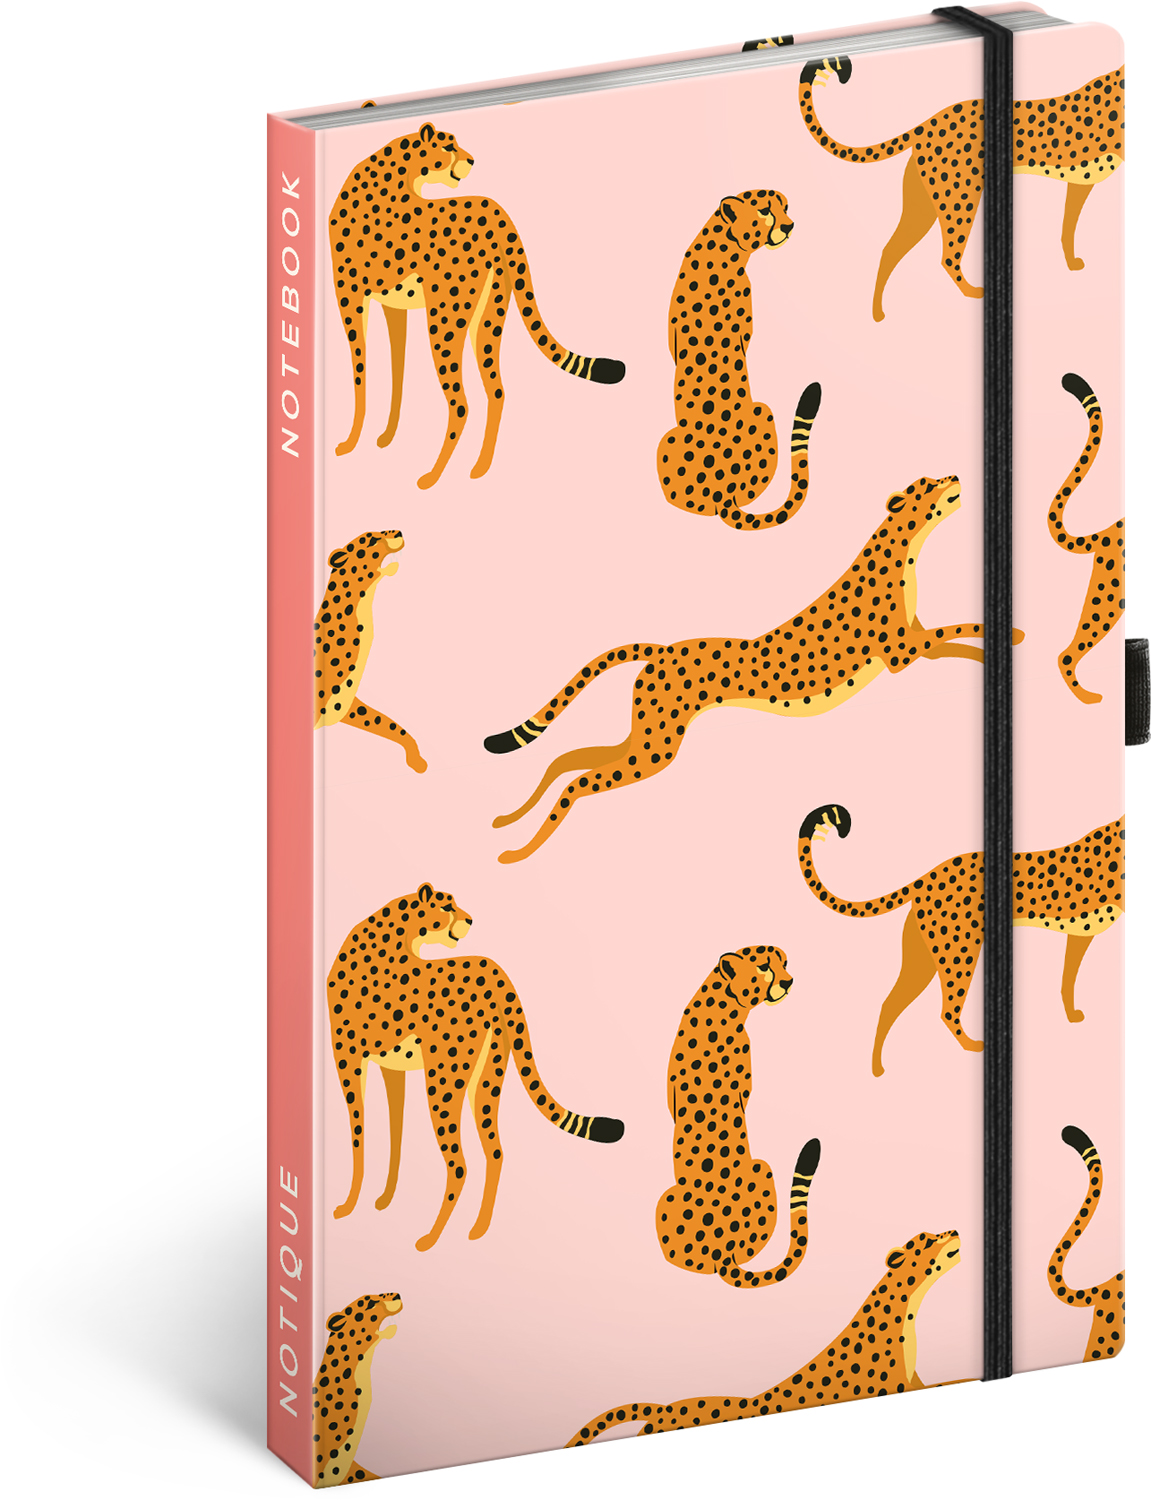 Linkovaný zápisník Leopardi, 13x21 cm